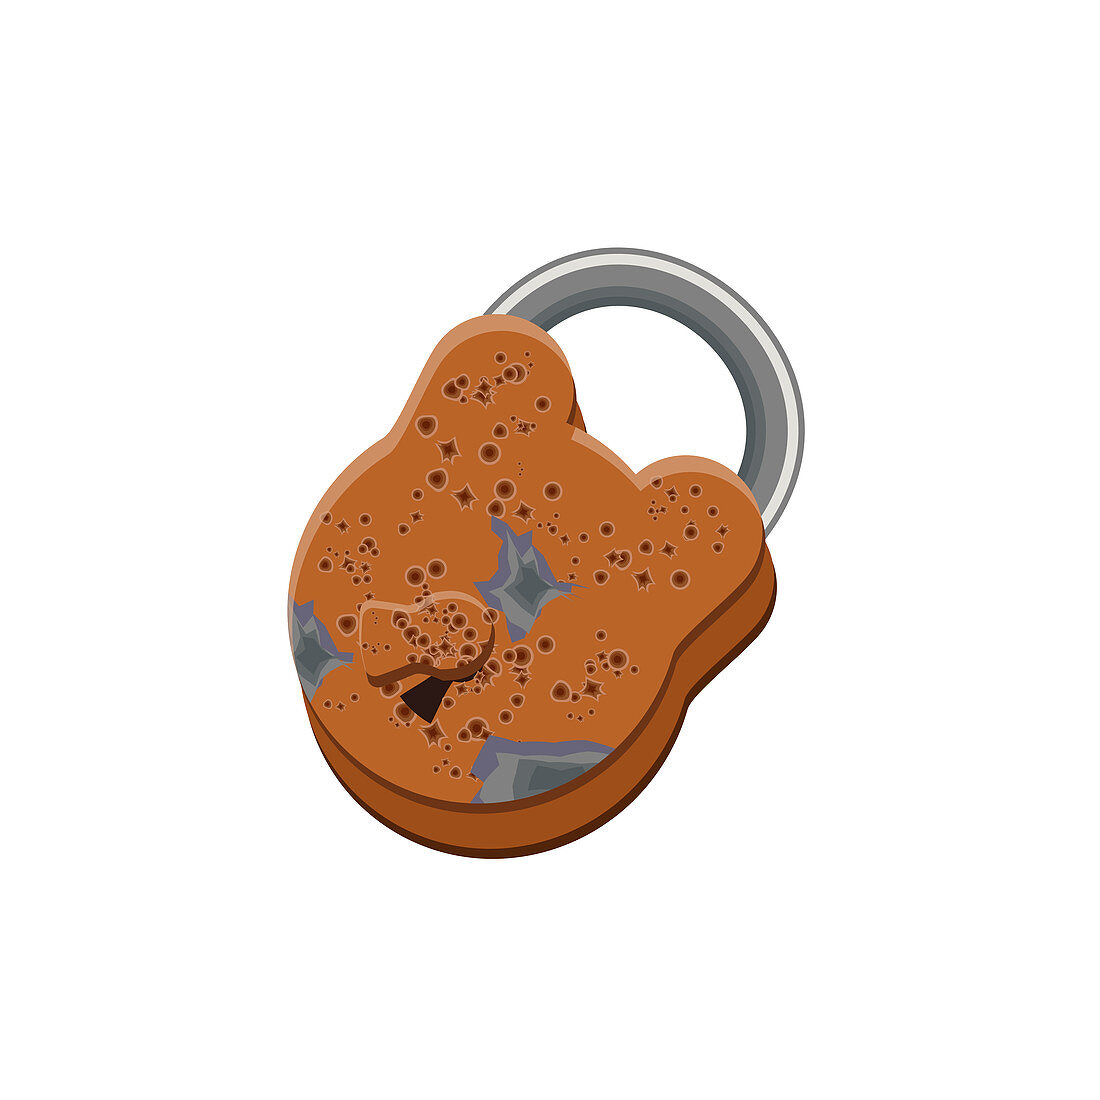 Rusted padlock, illustration